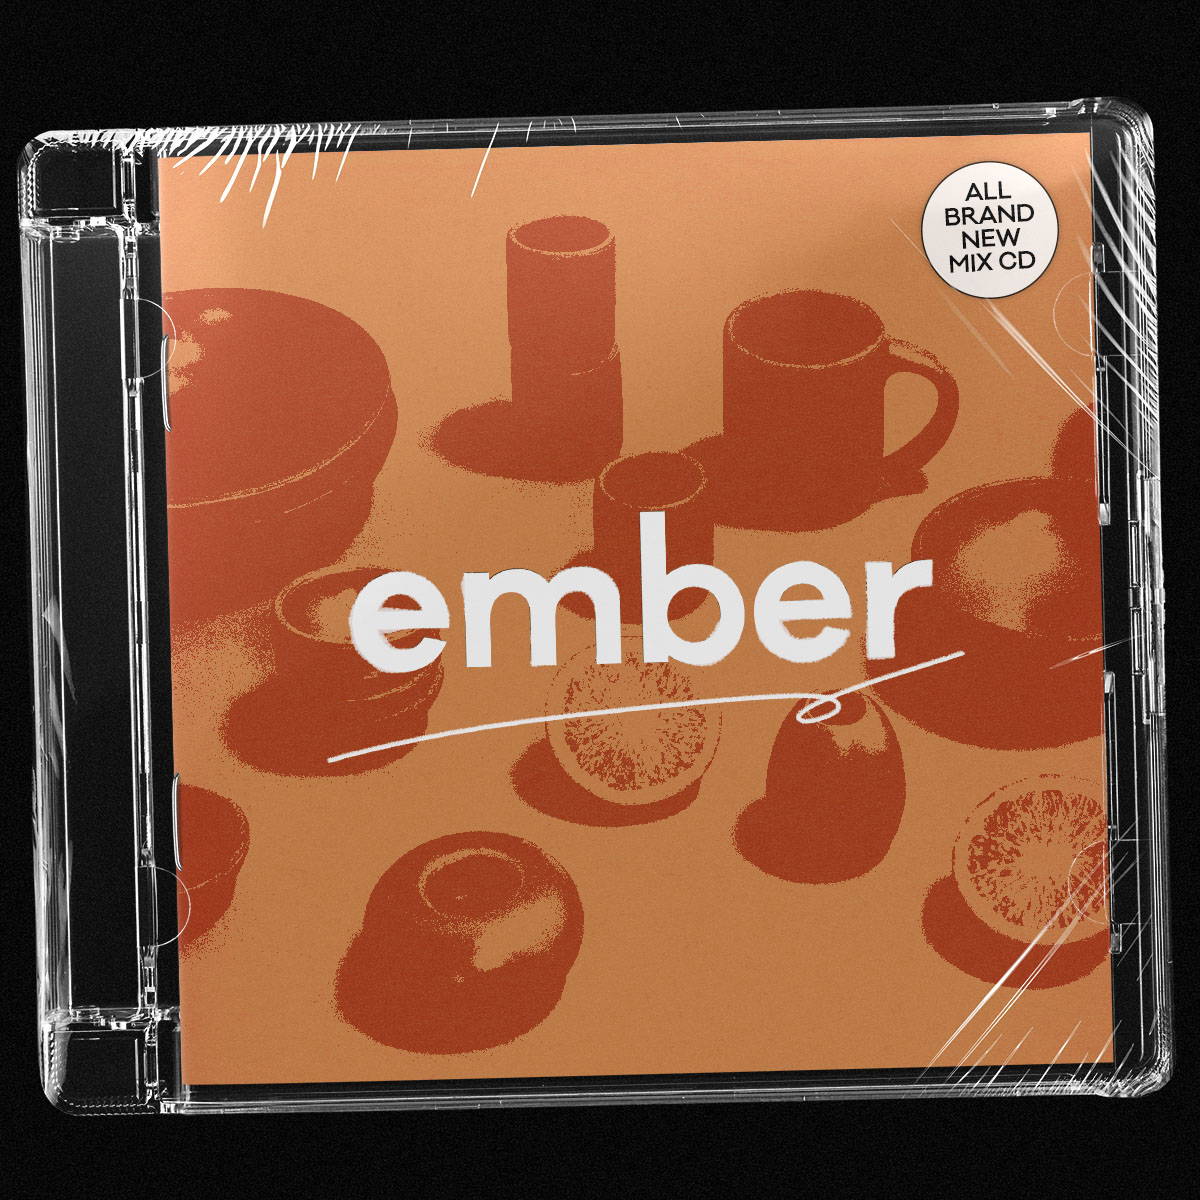 East Fork Ember playlist on Spotify